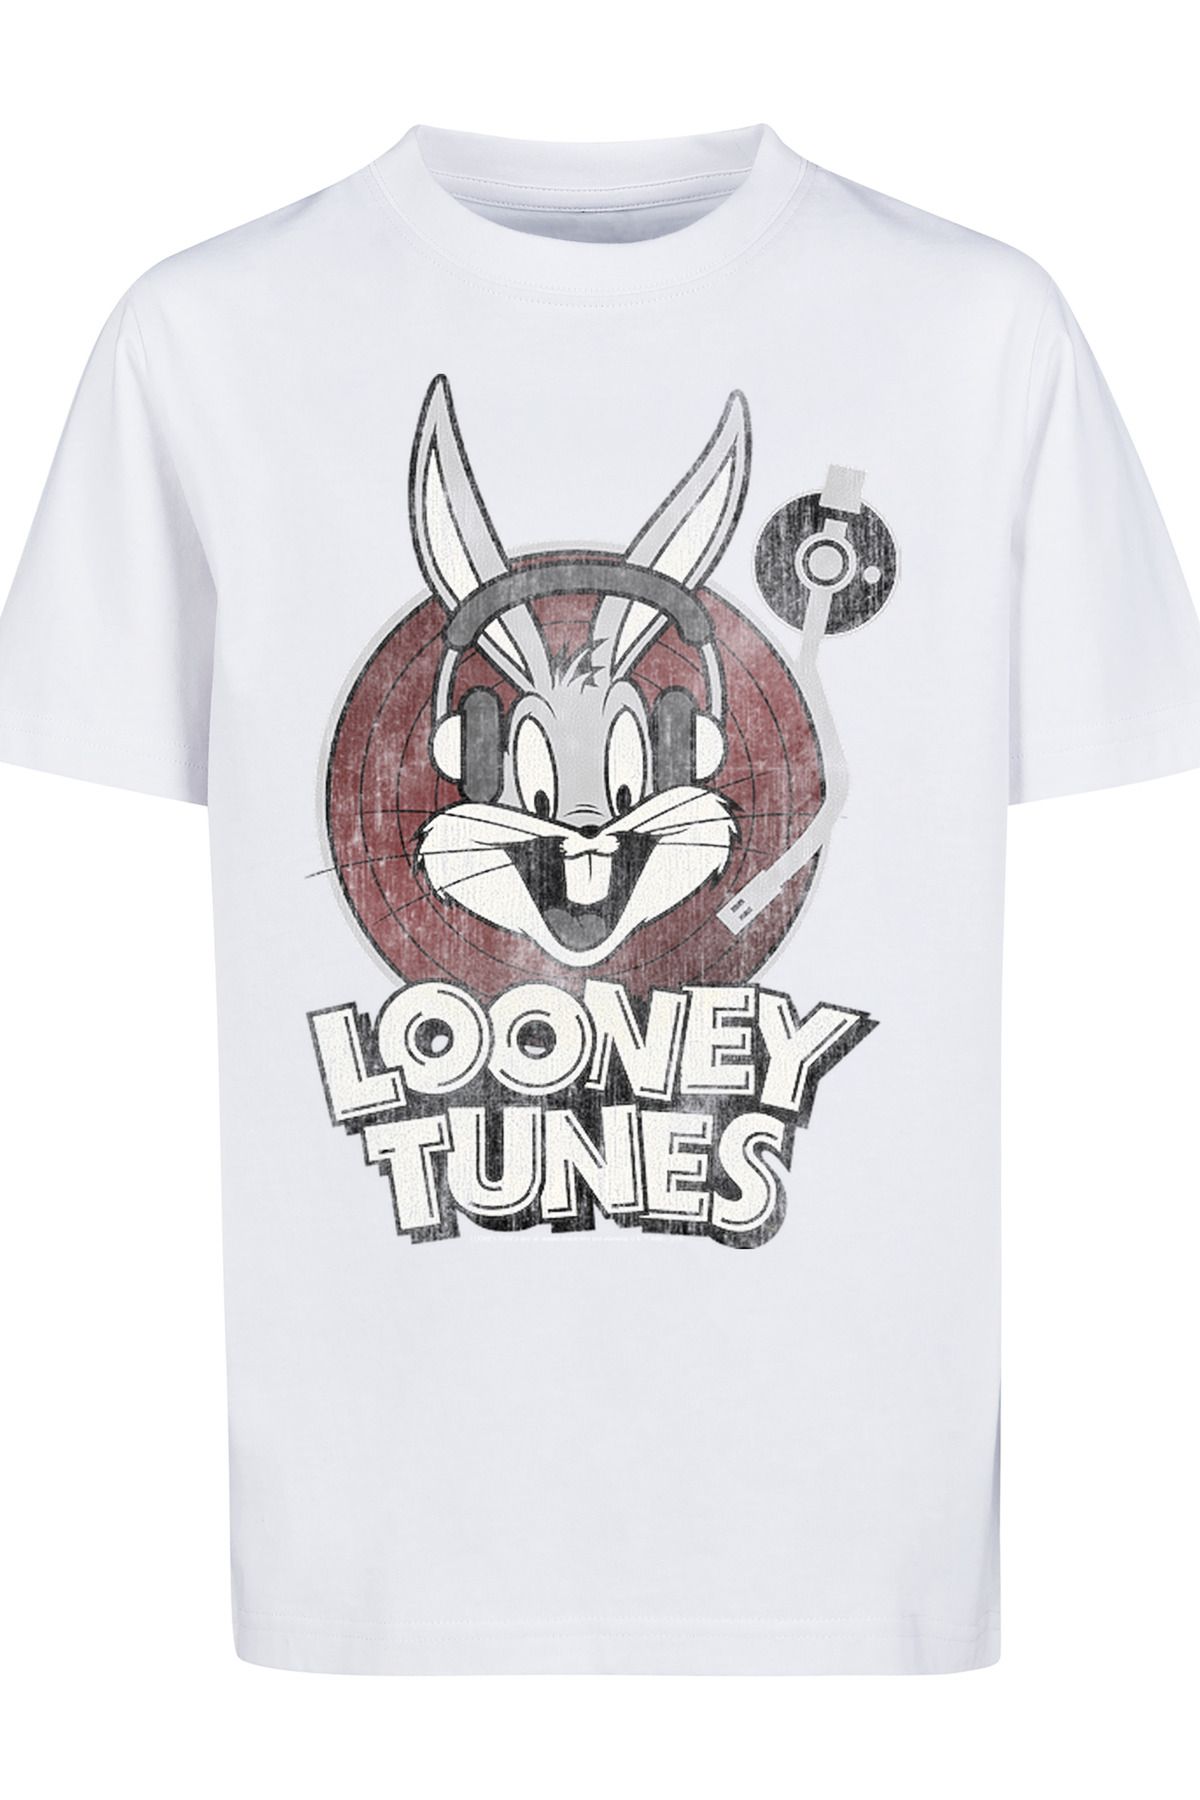 F4NT4STIC Kinder Kids Basic mit Bunny Tunes - T-Shirt Bugs Trendyol Looney